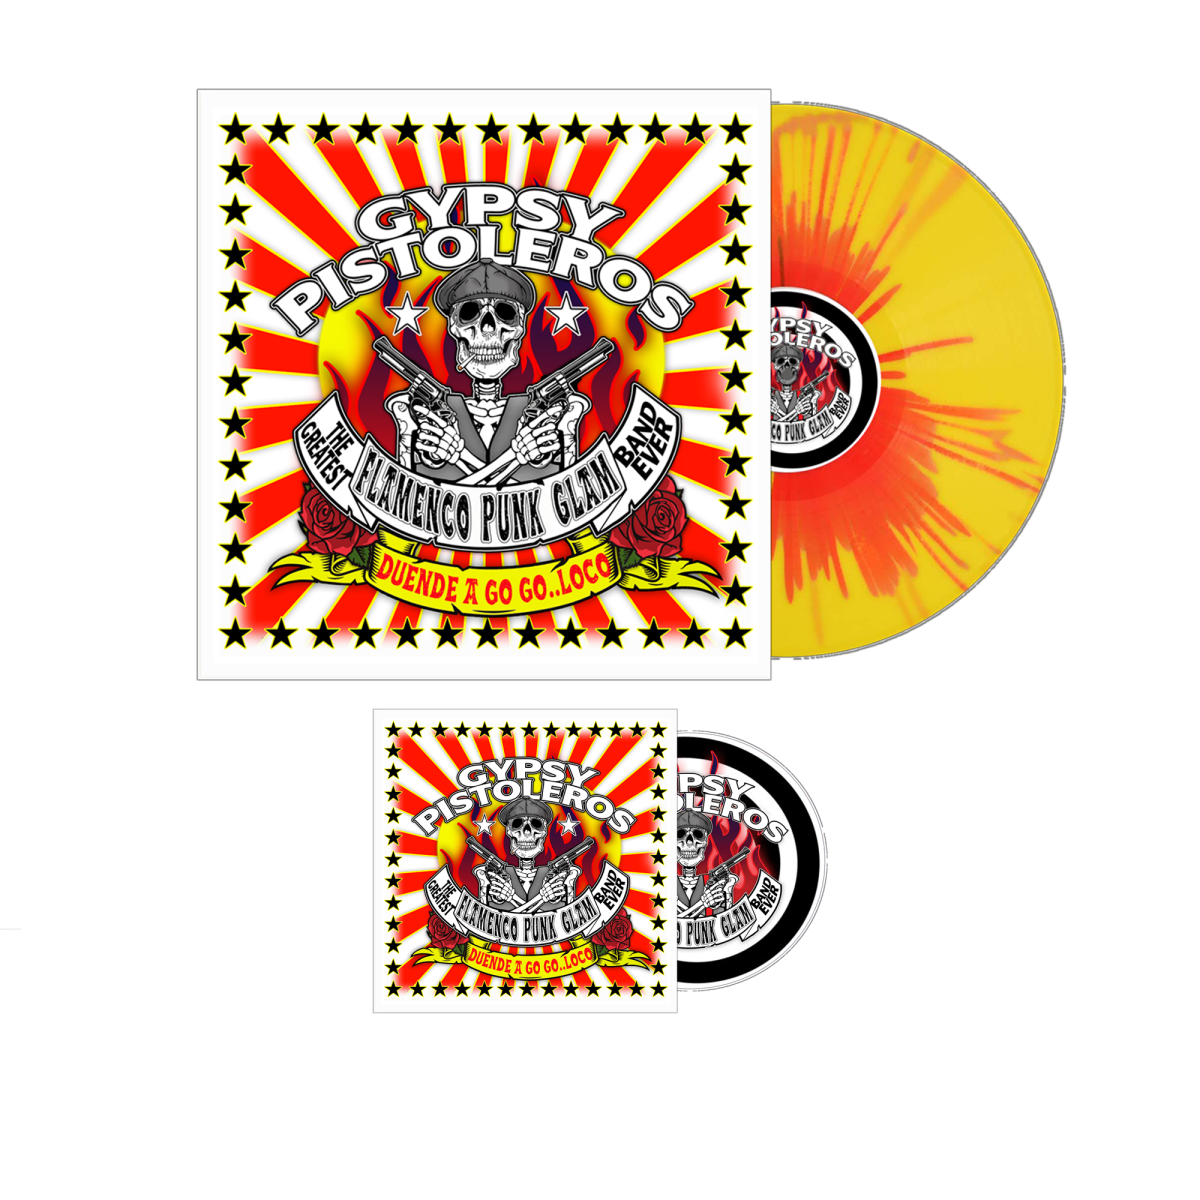 Gypsy Pistoleros "Duende a Go Go Loco" Yellow Splatter Vinyl & Signed CD